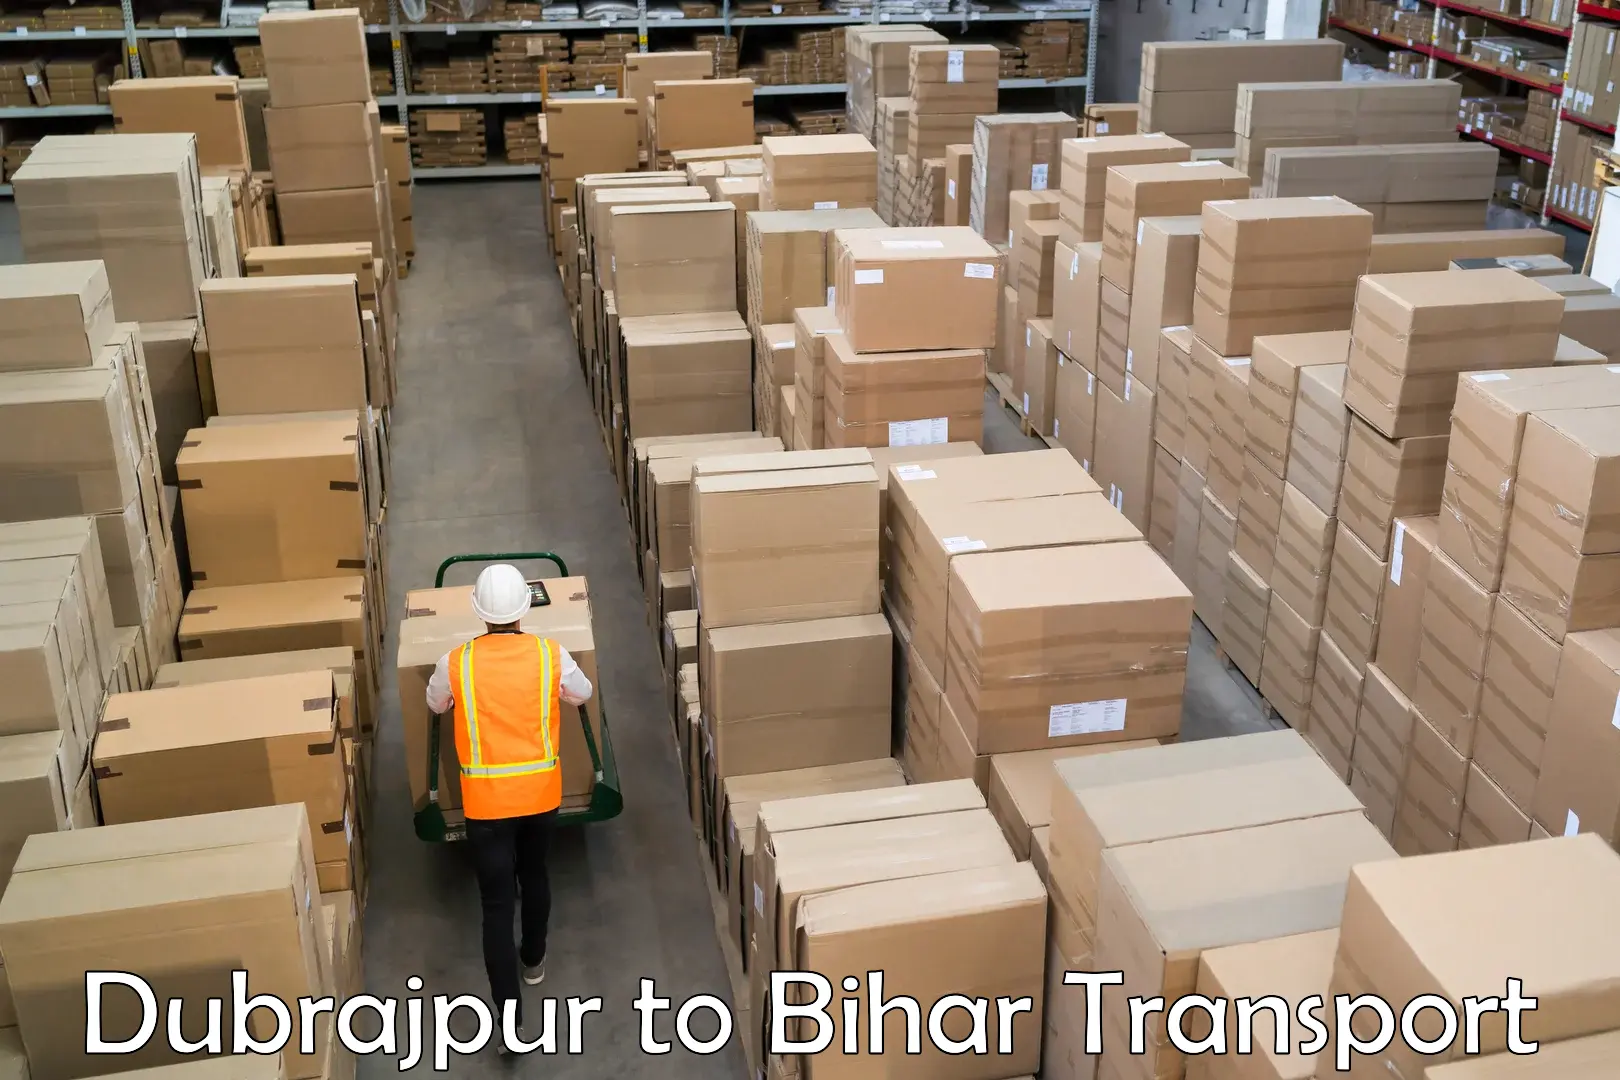 Daily parcel service transport Dubrajpur to Aurangabad Bihar